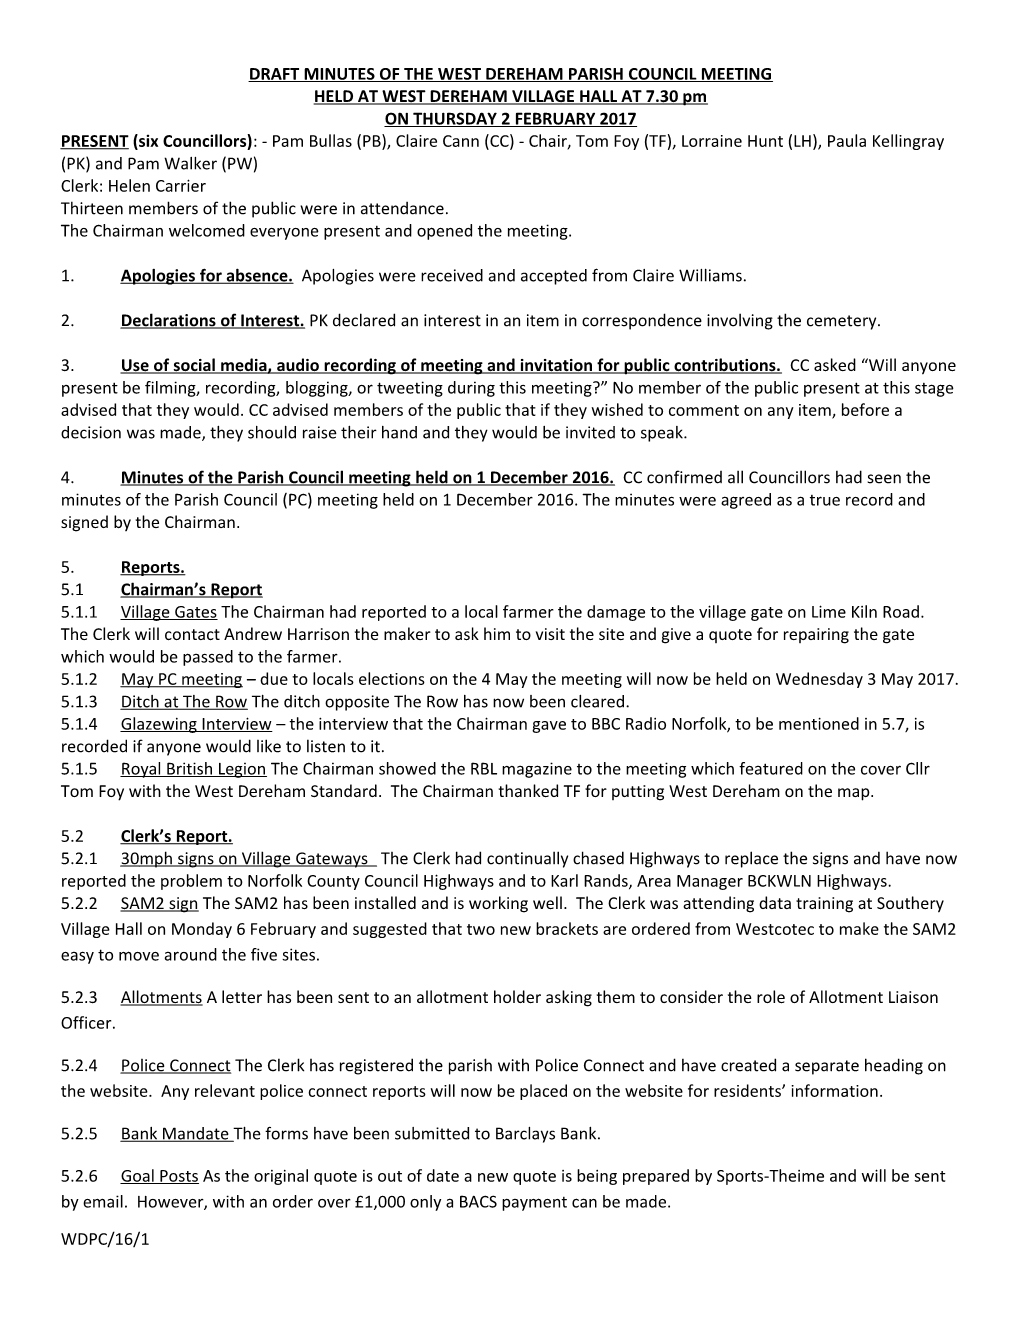 Draft Minutes of the West Dereham Parish Council Meeting